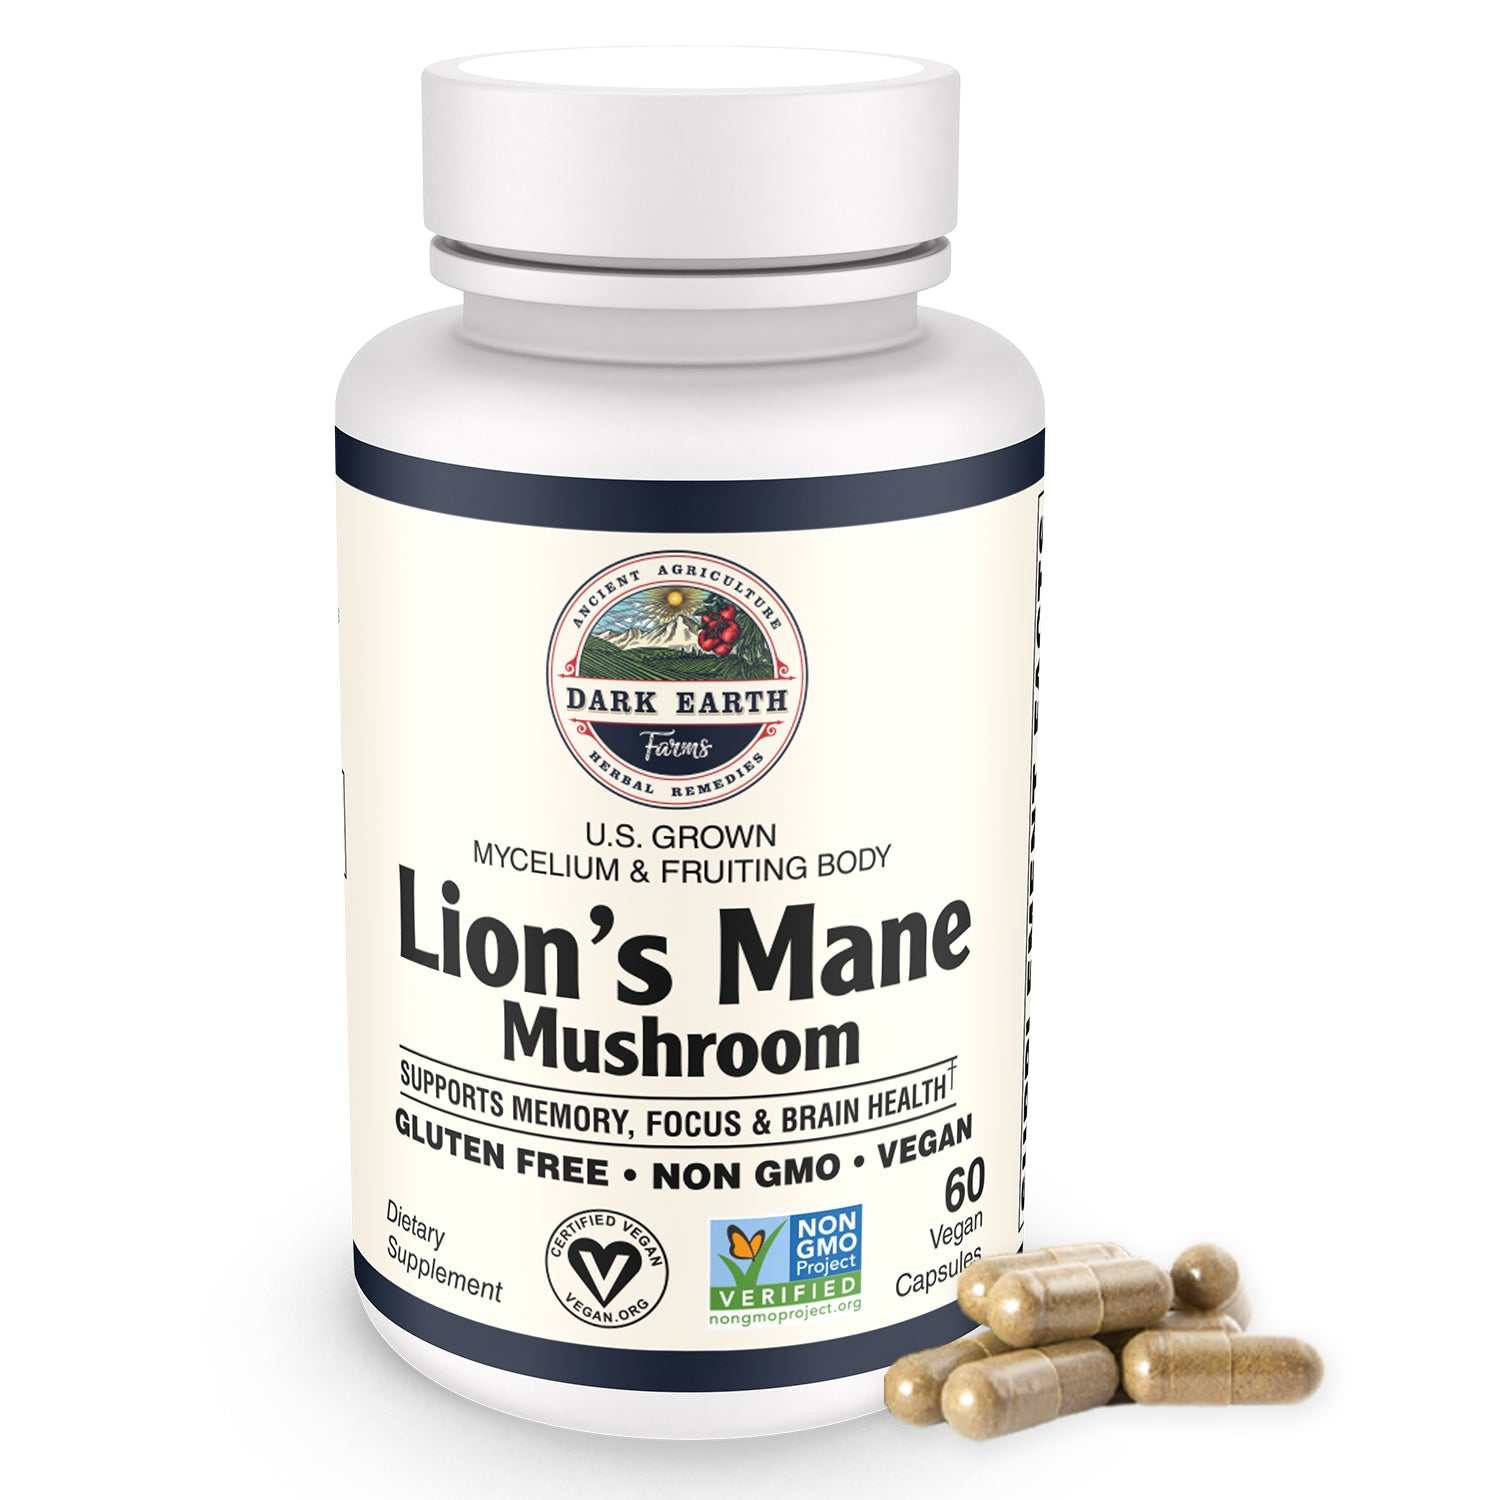 Organic Lions Mane mushroom in Vegan capsules supports memory, focus and brain health